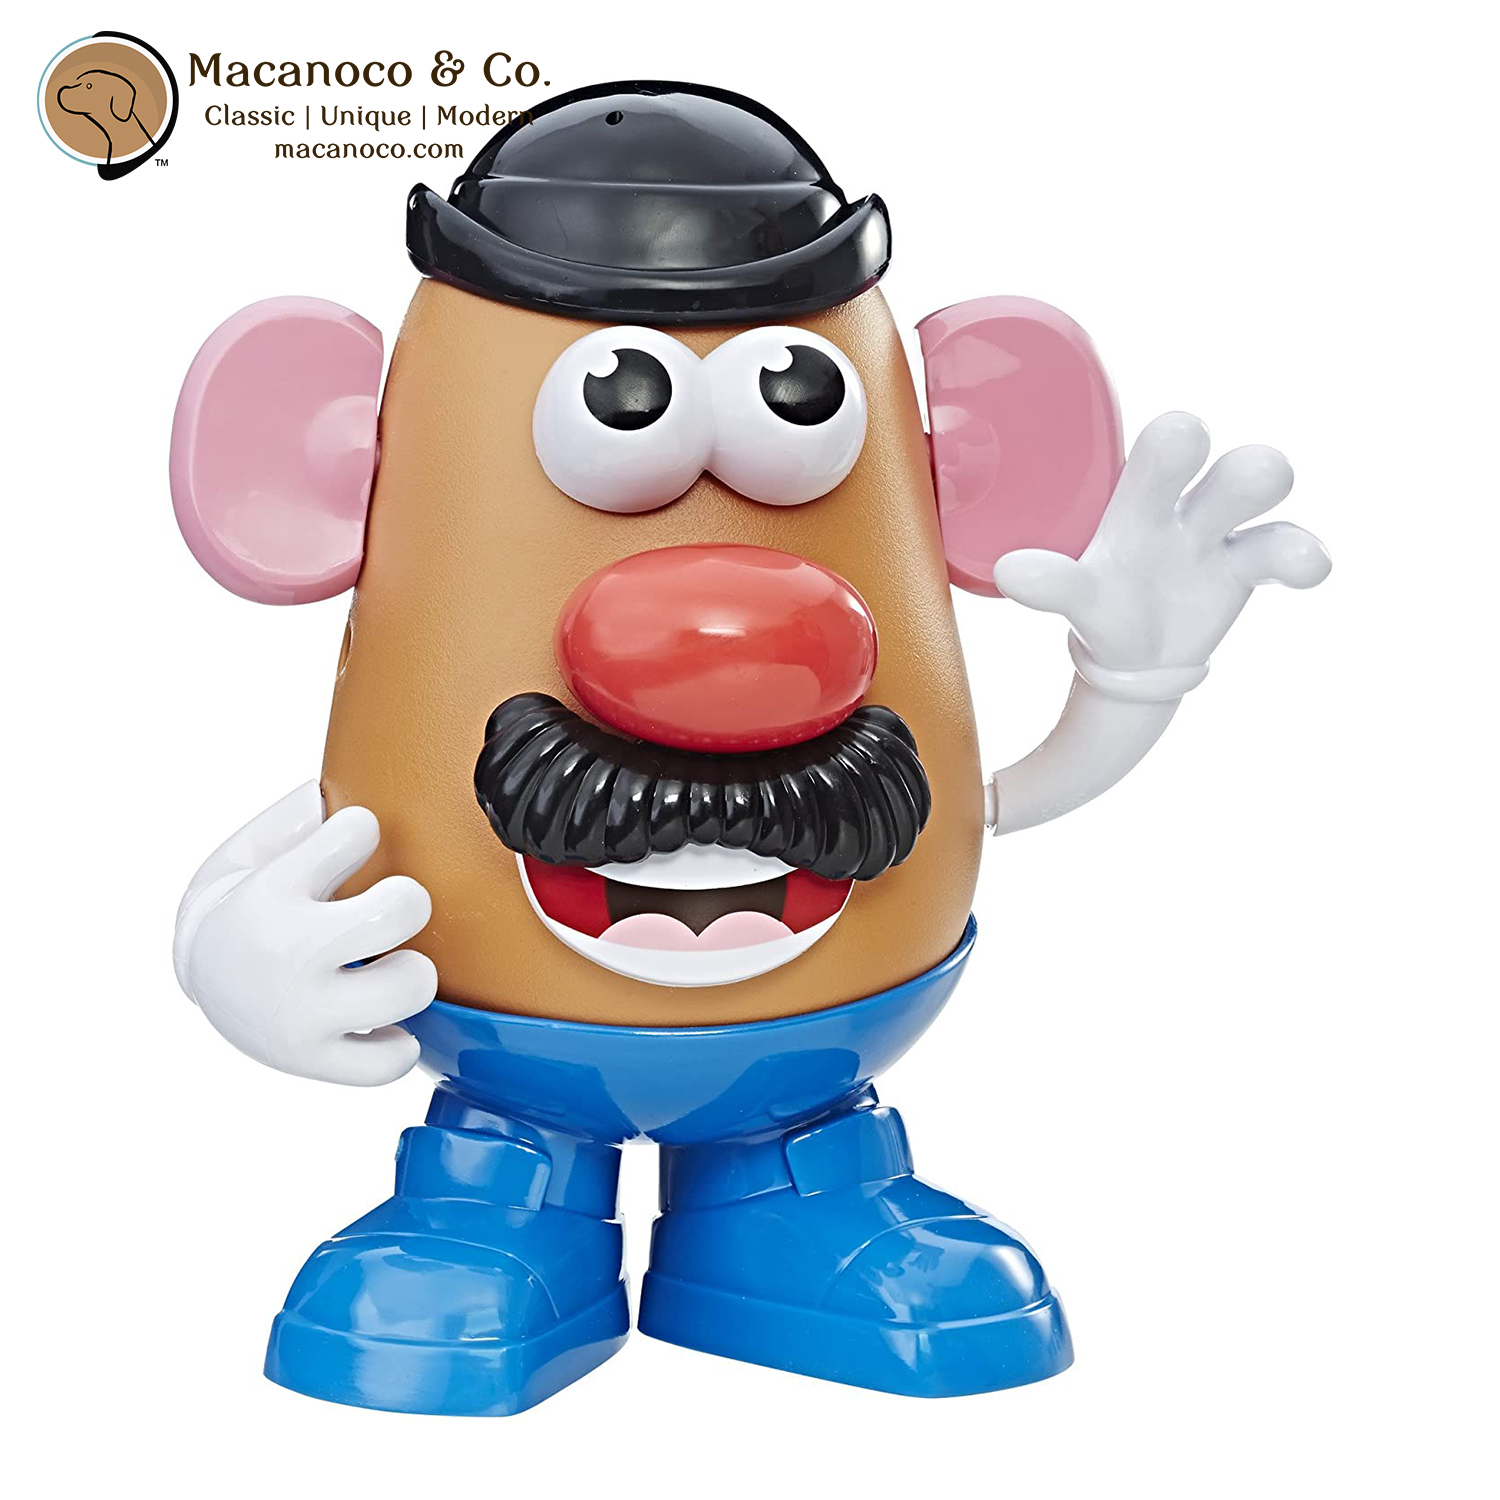 Mrs Potato Head by Playskool and Hasbro - Toy Story 3 adventures